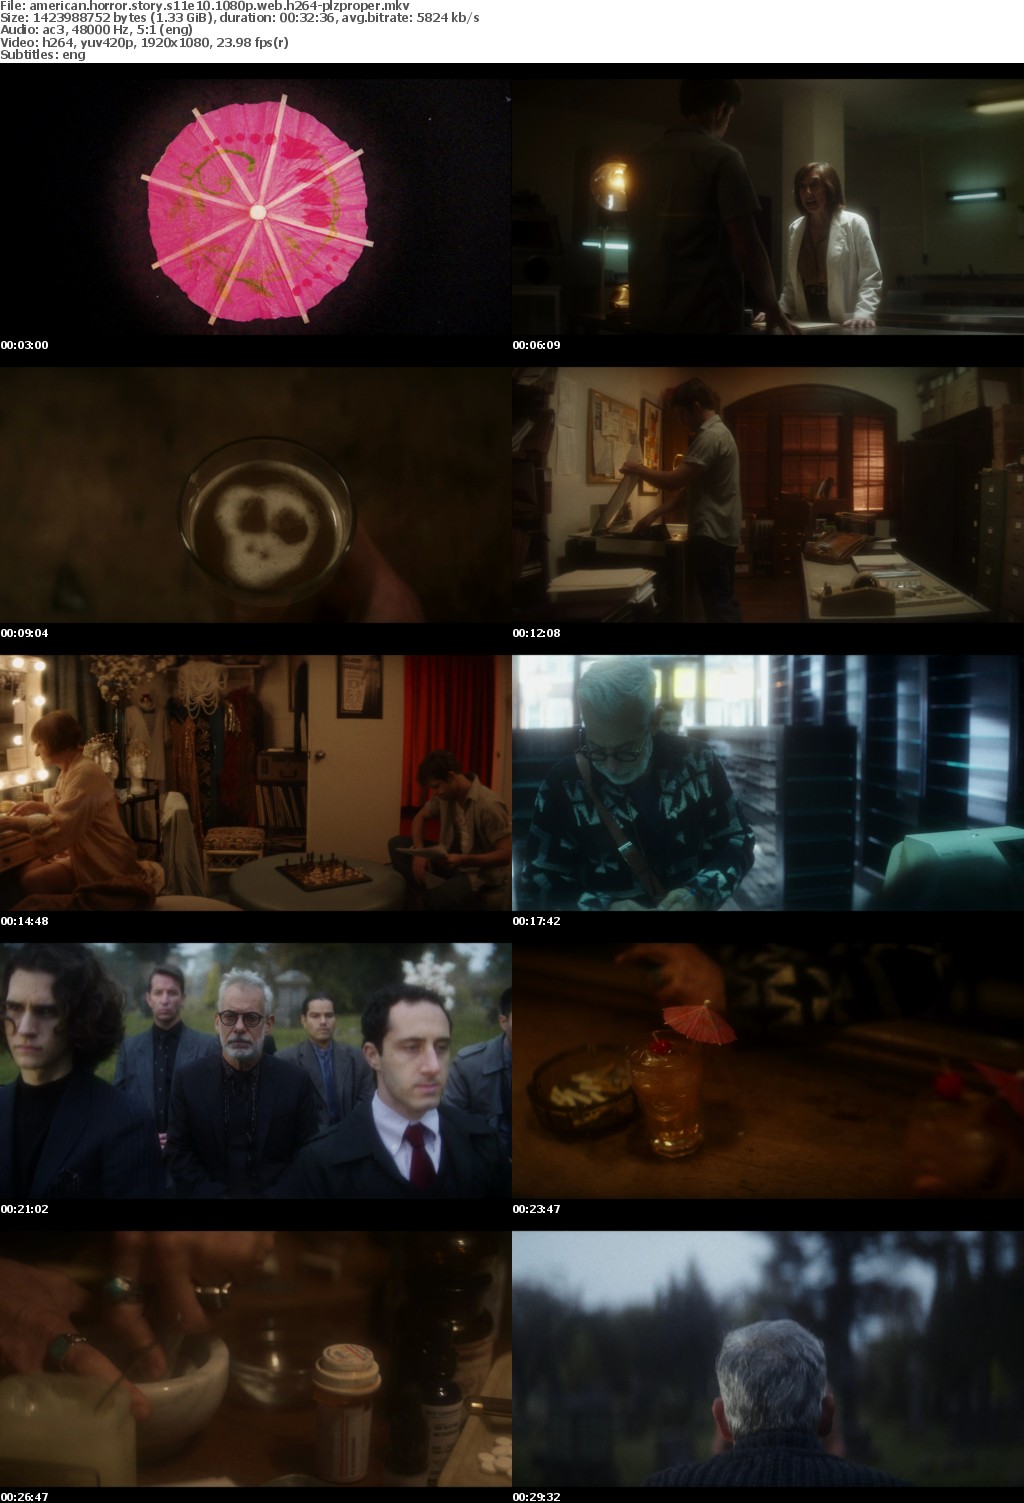 American Horror Story S11E10 1080p WEB H264-PLZPROPER